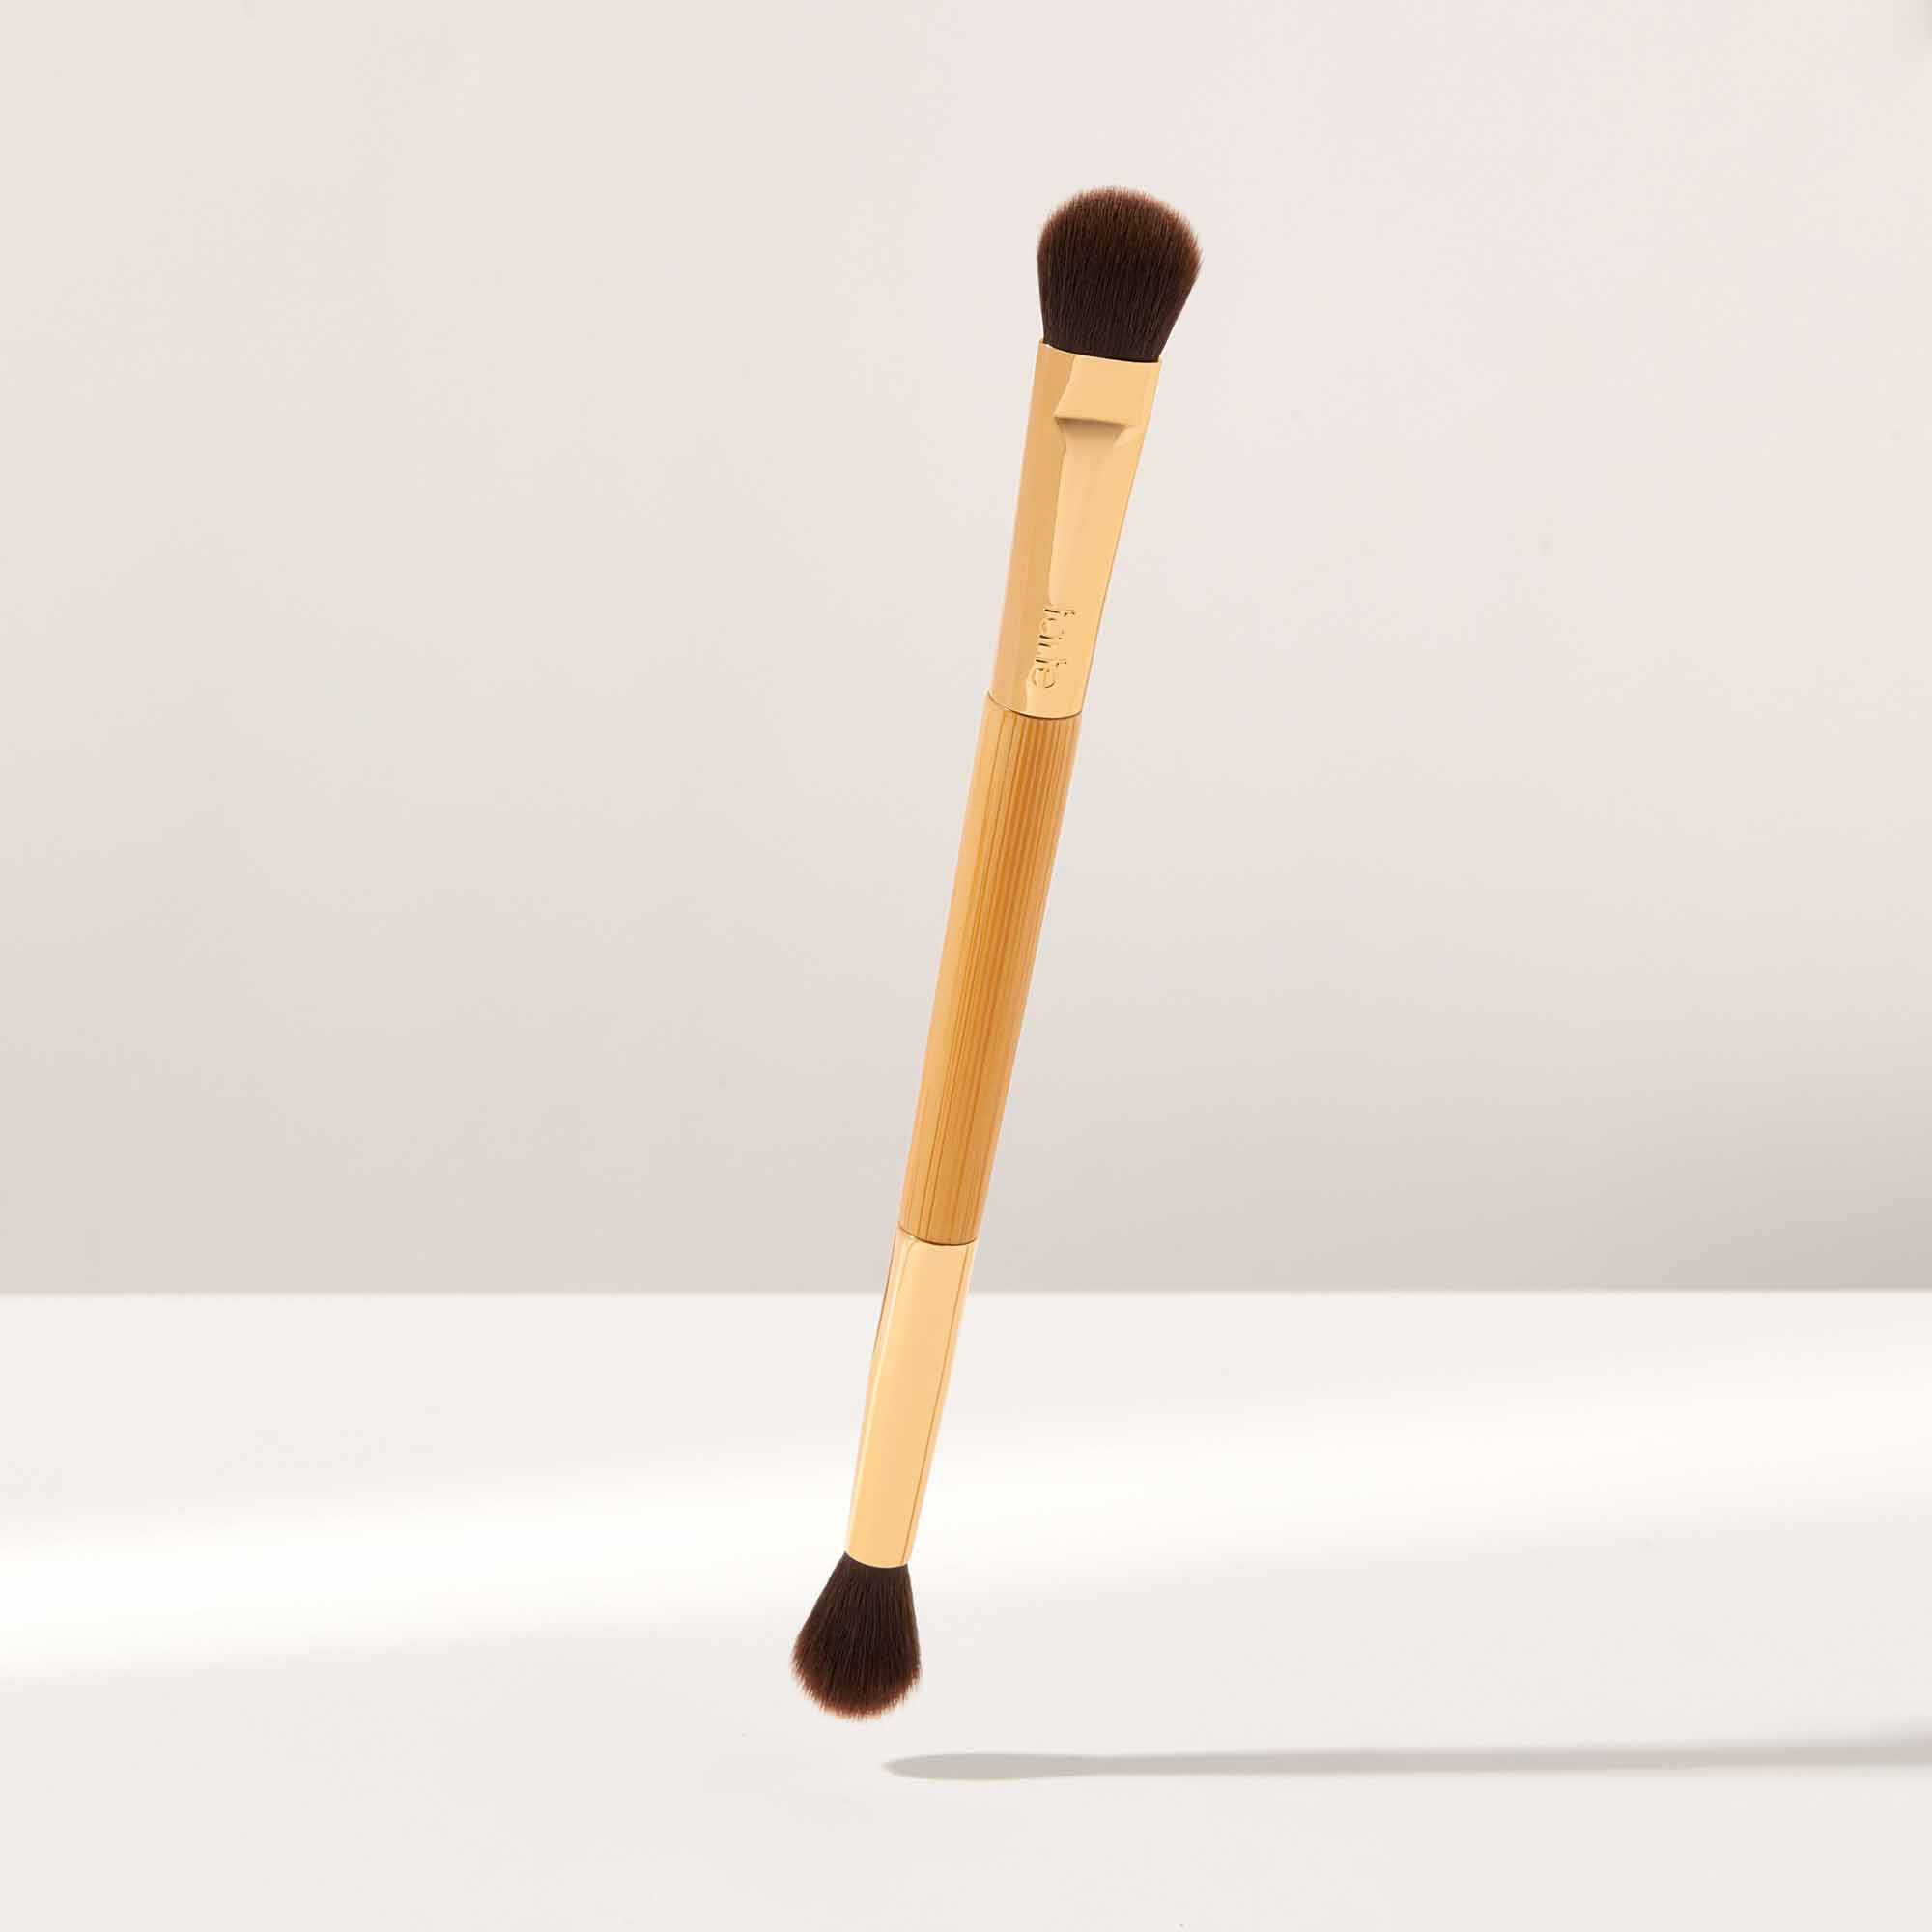 Tarte Double-Ended Pencil Crease & Liner Brush - Multi